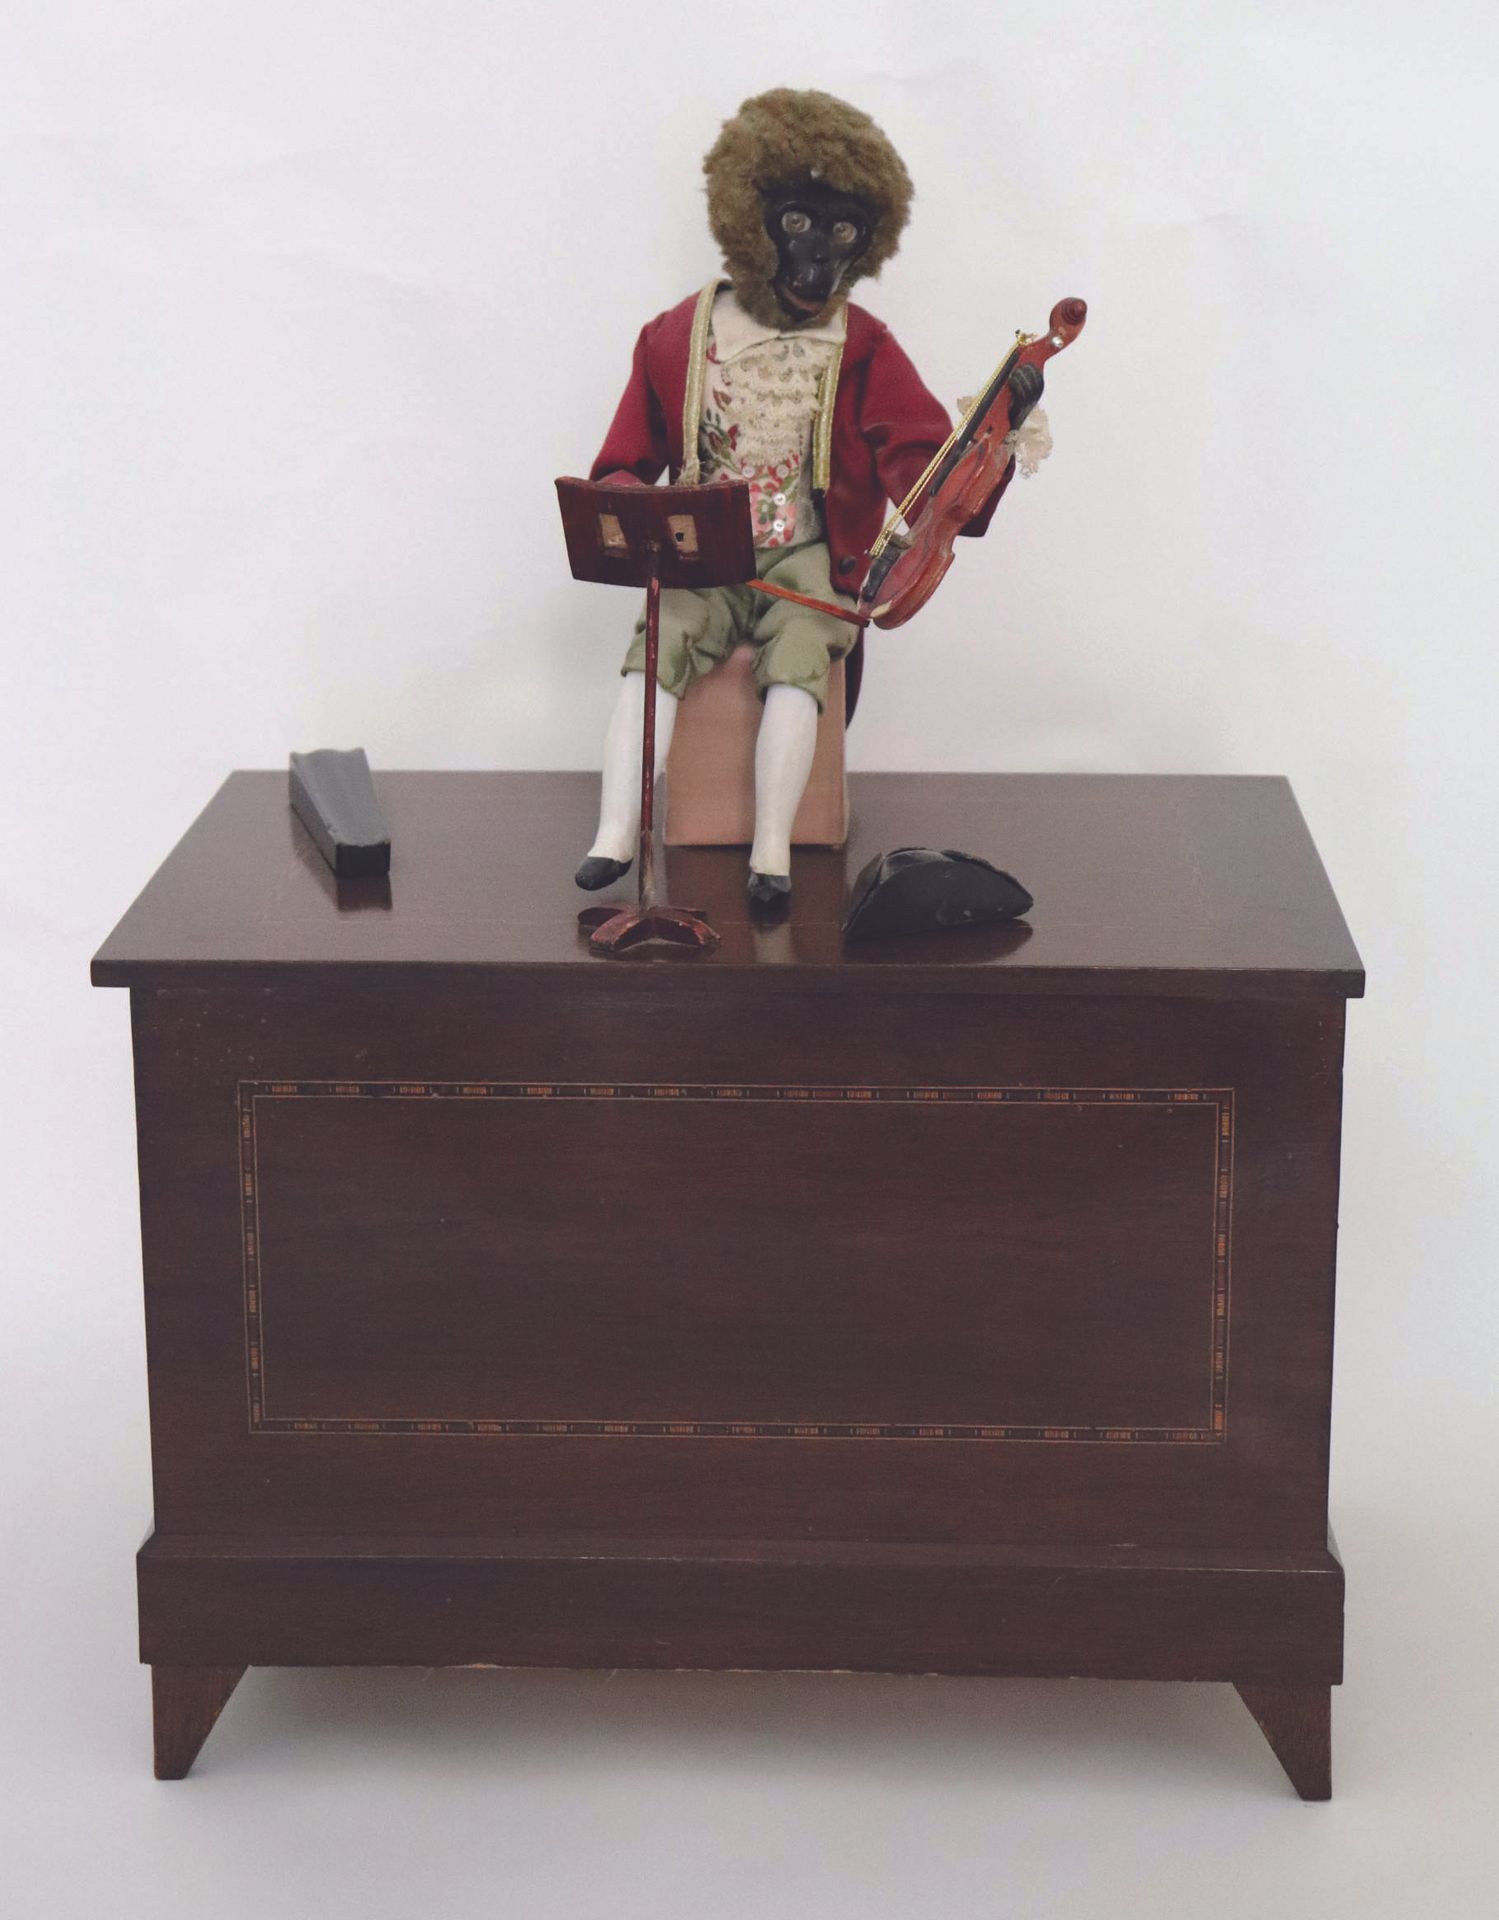 Null 风琴与翡冷翠猴子

归功于热罗姆-蒂布维尔。

19世纪晚期。

坐在音乐架前，一只自动演奏的小提琴猴用他的弓为他所安装的风琴的音乐伴奏。

这个迷人&hellip;